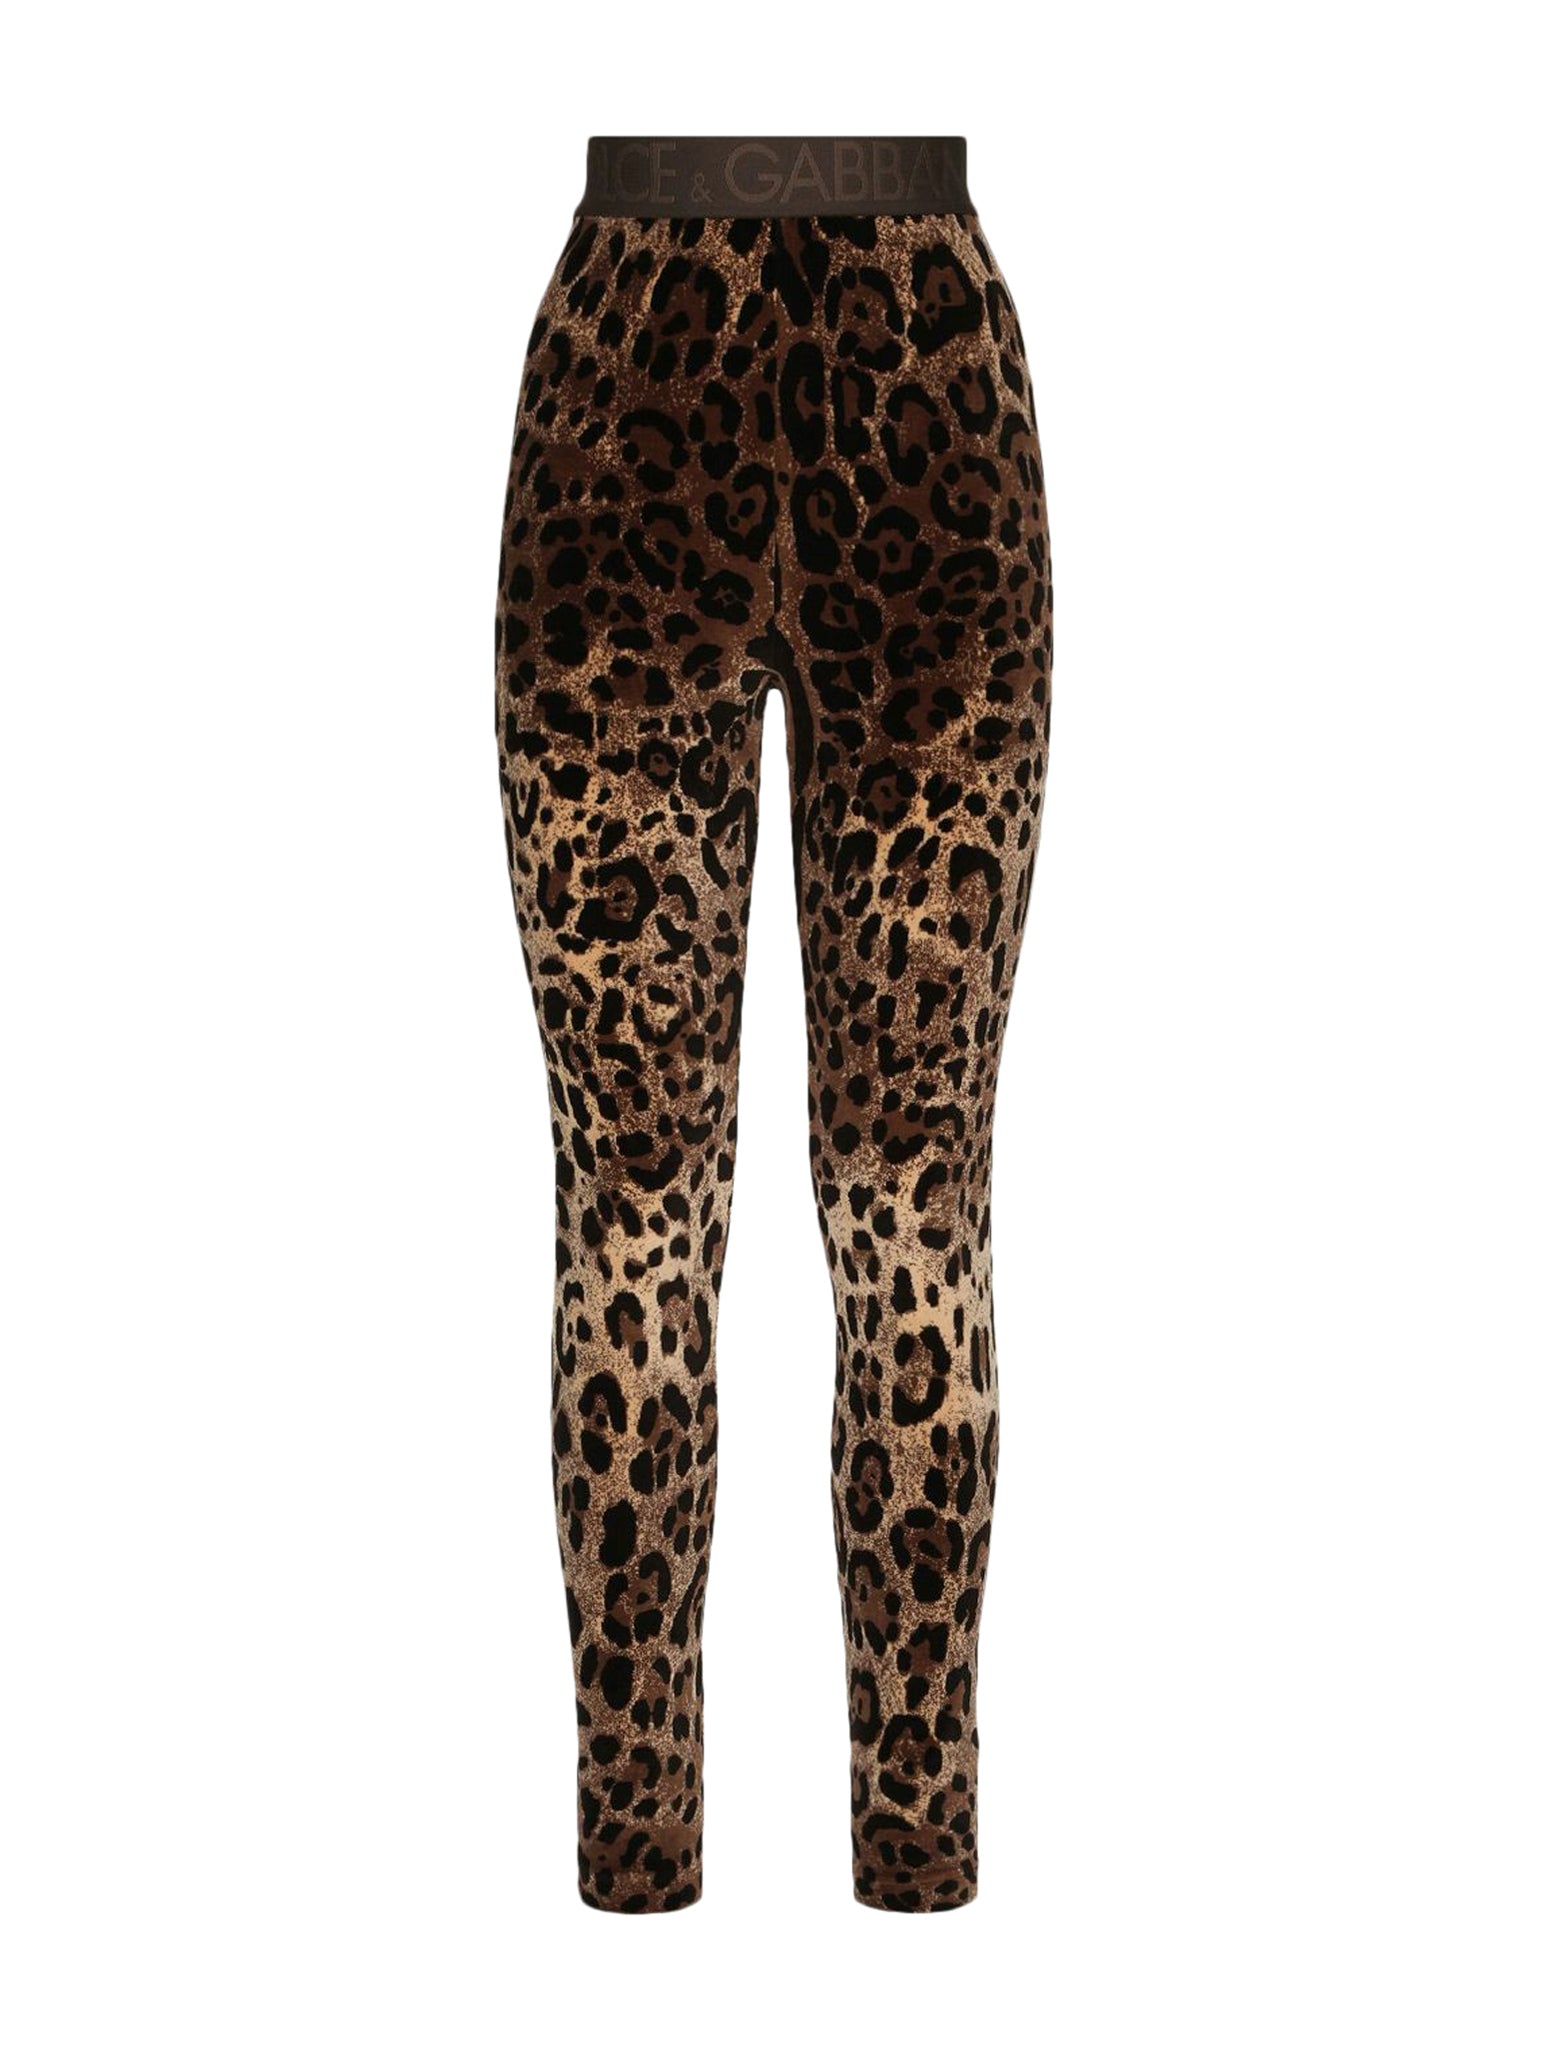 Jacquard leopard leggings